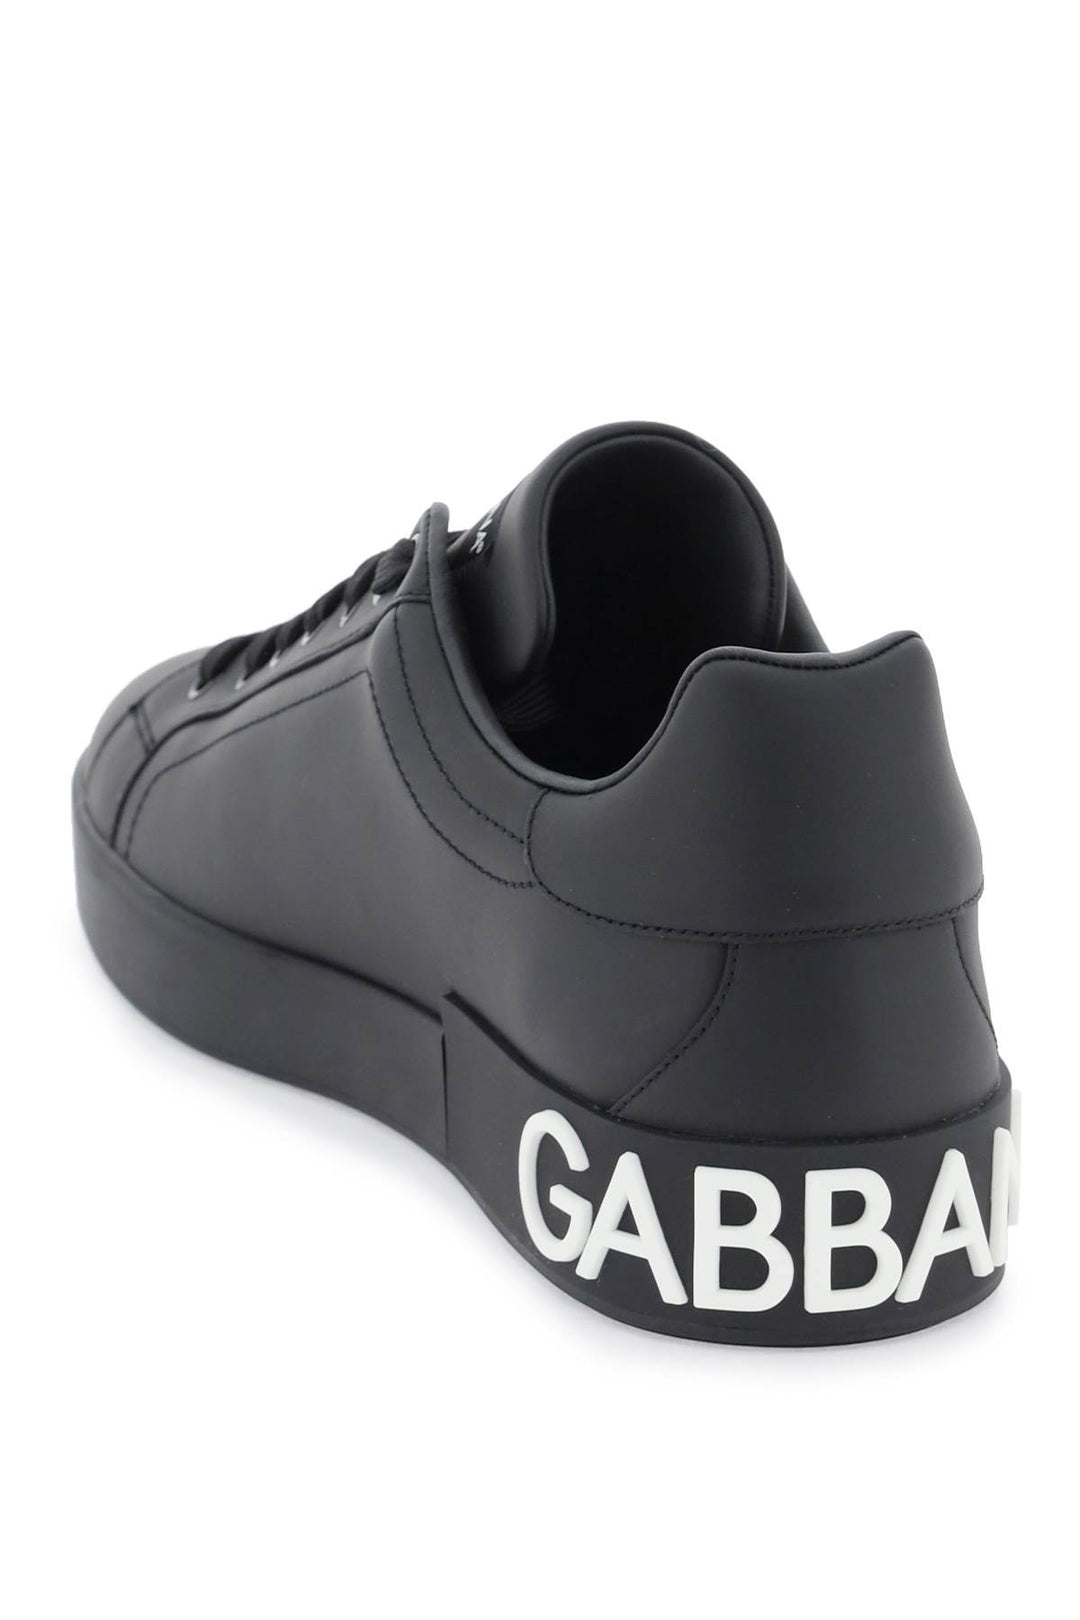 Dolce & Gabbana Leather Portofino Sneakers With Dg Logo   Black